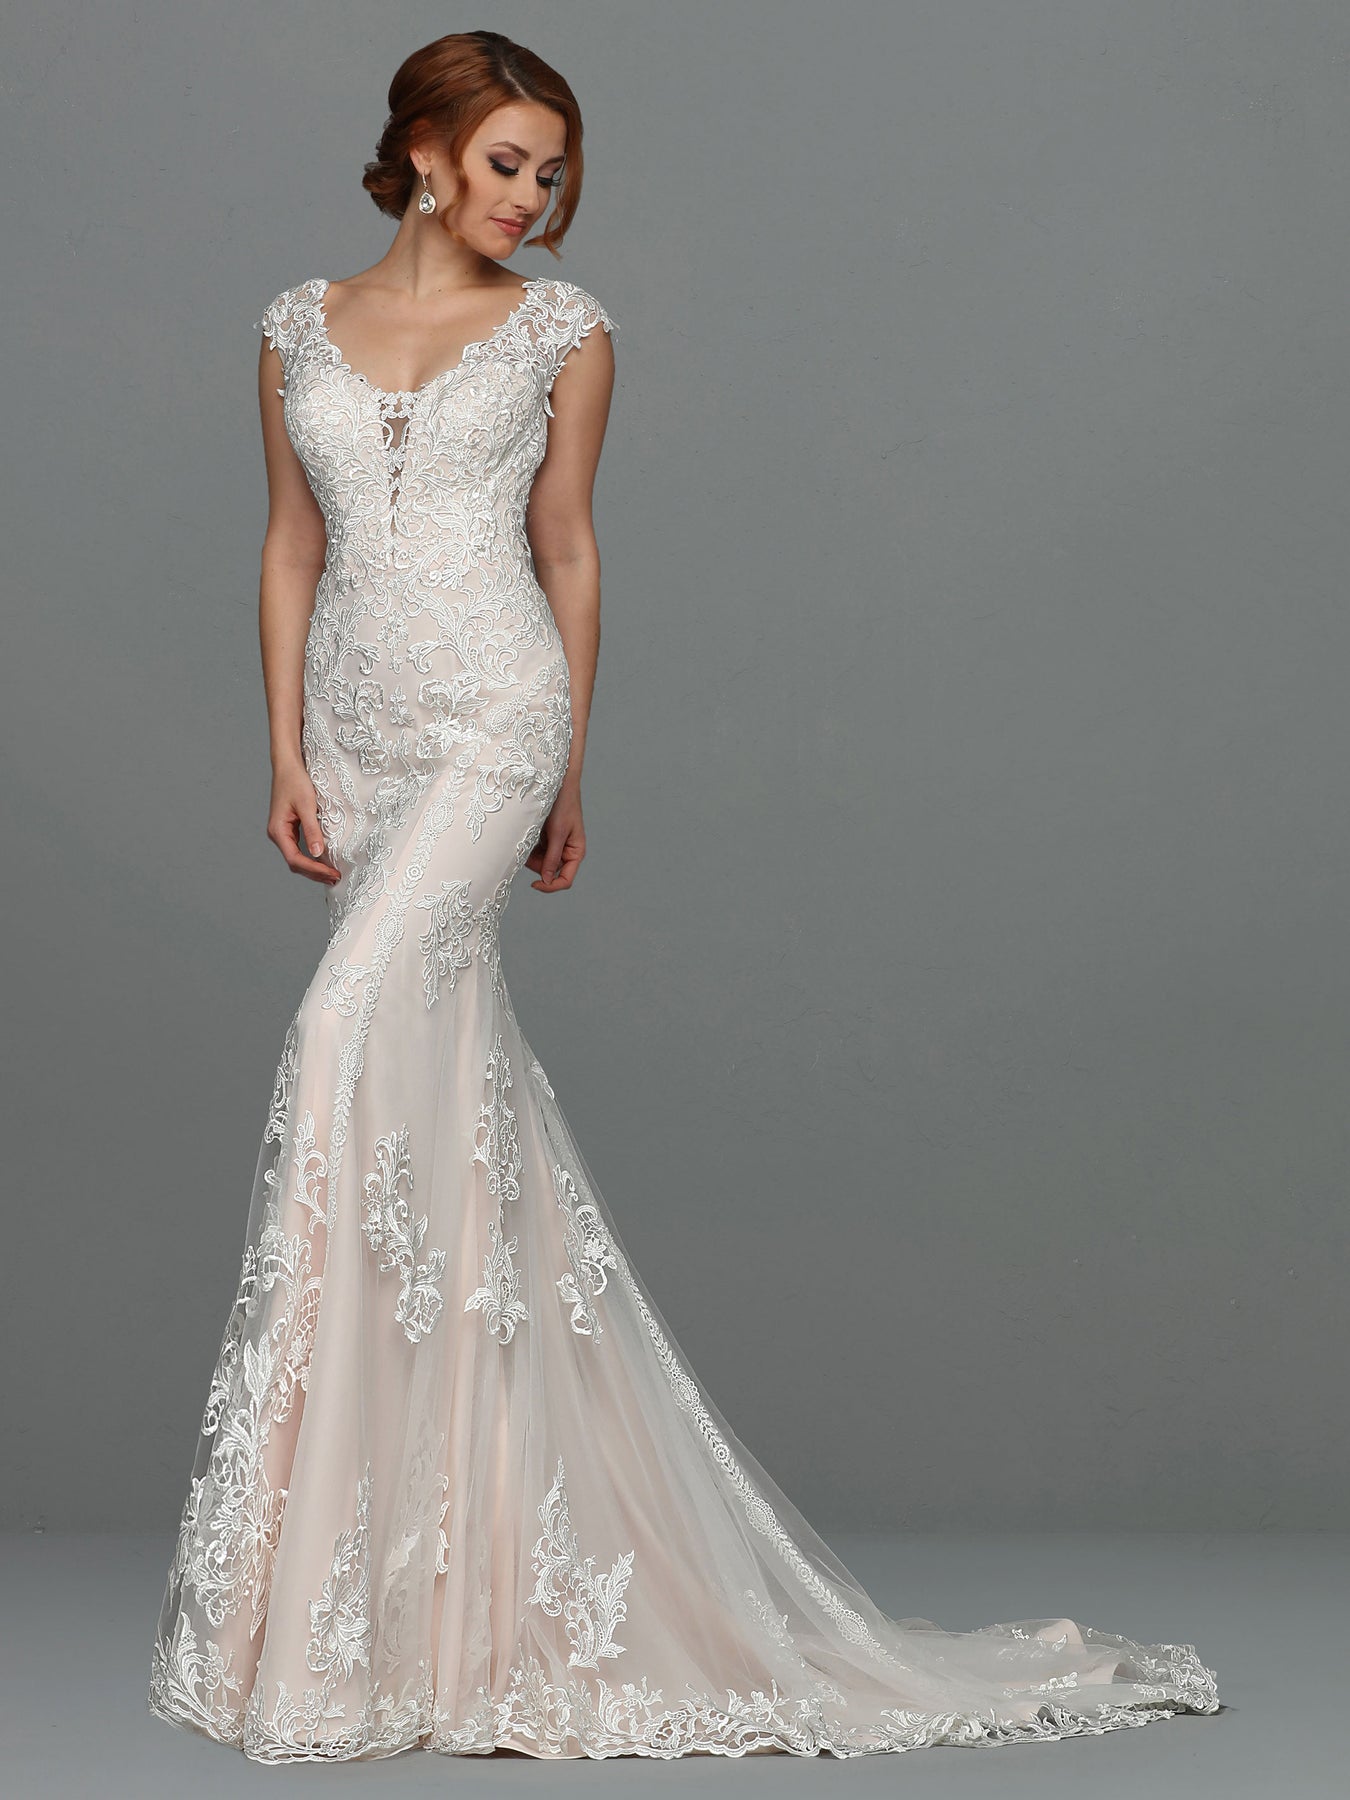 Faith V-Neck Lace Tulle Wedding Dress - Avery Austin